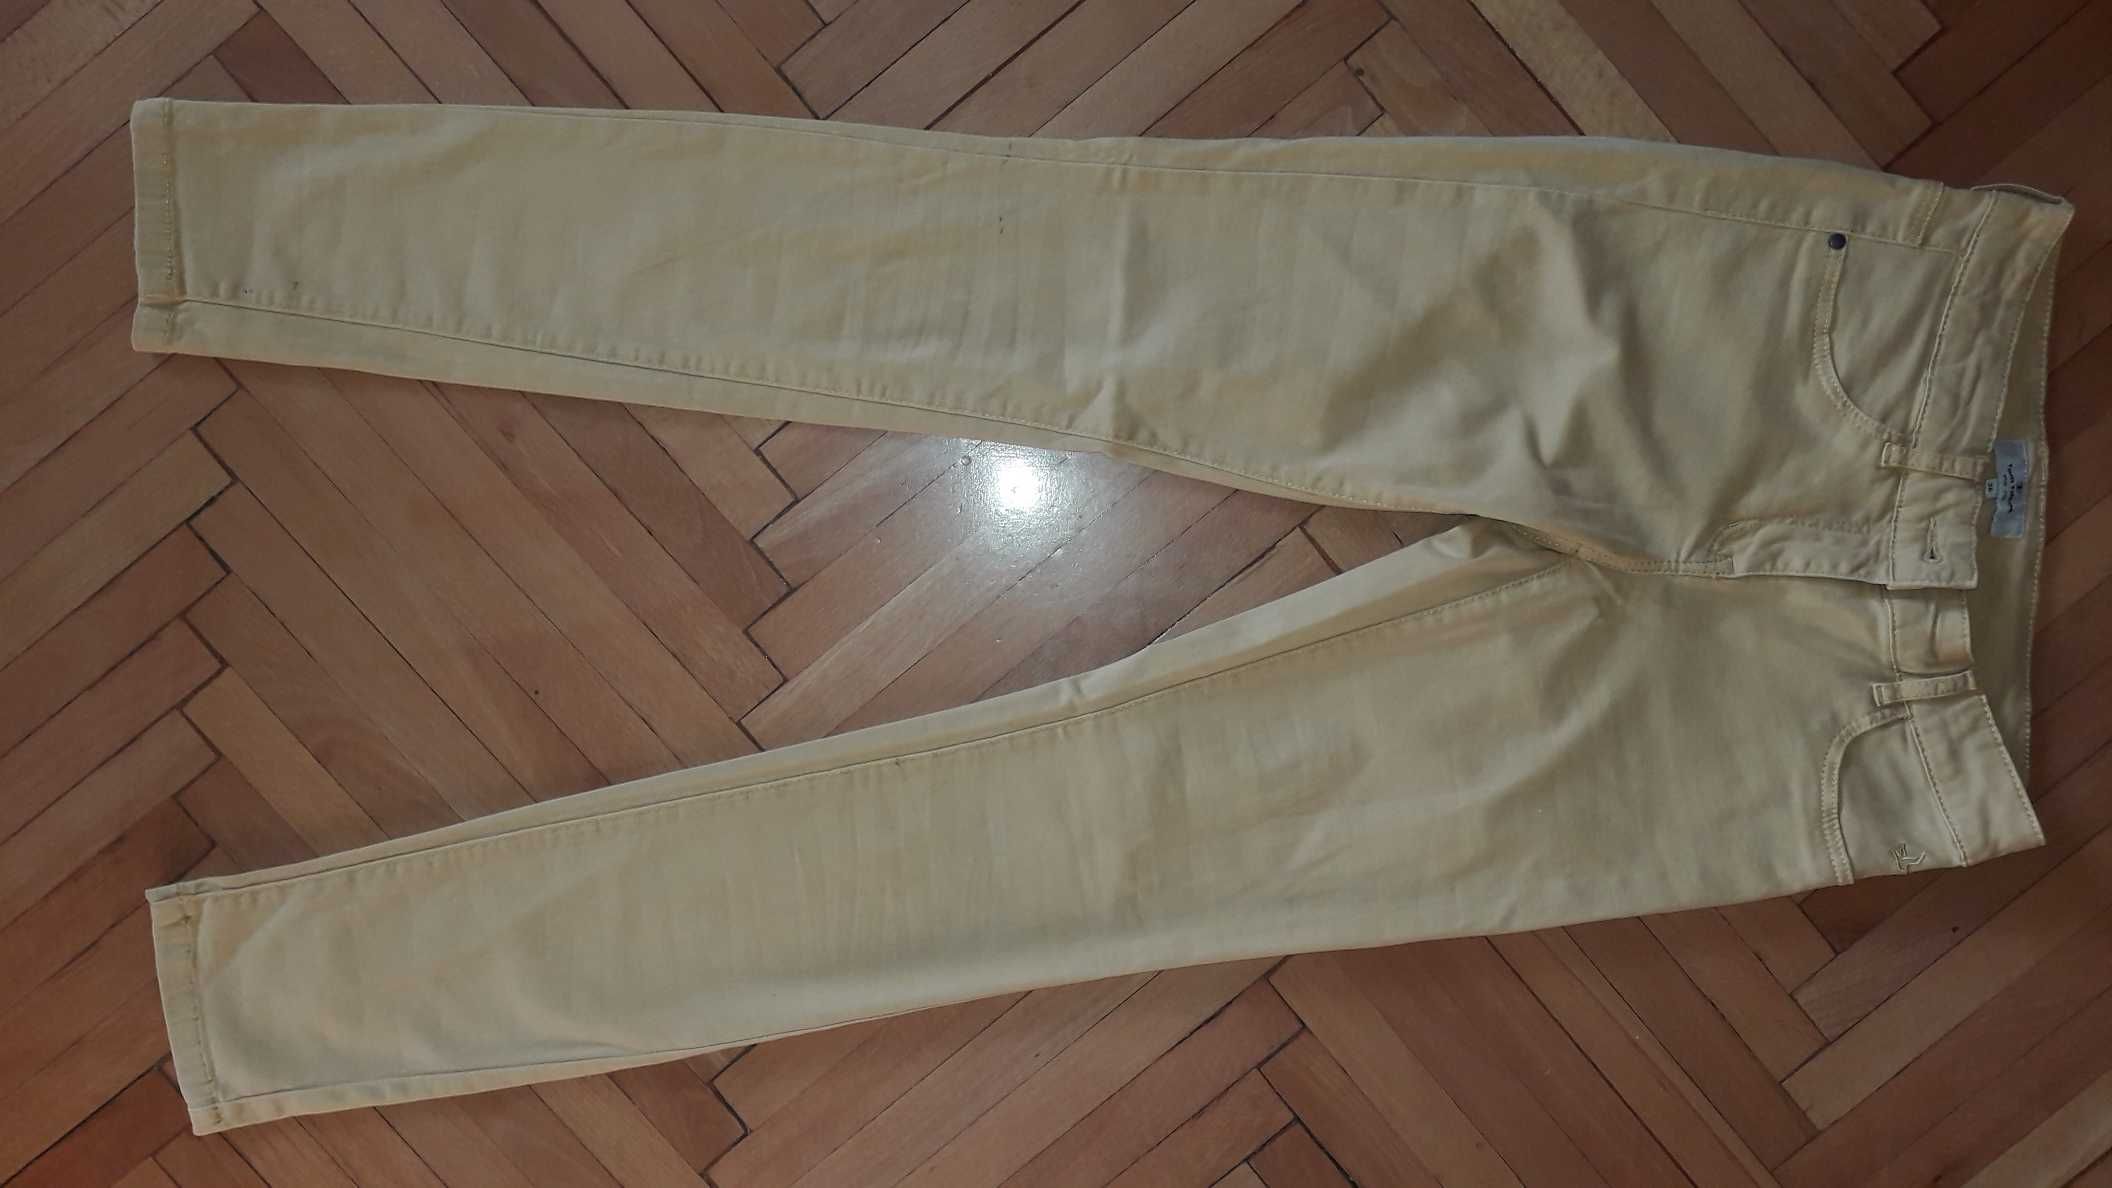 Blugi / pantaloni fete 10-12 ani second hand, pret per bucata